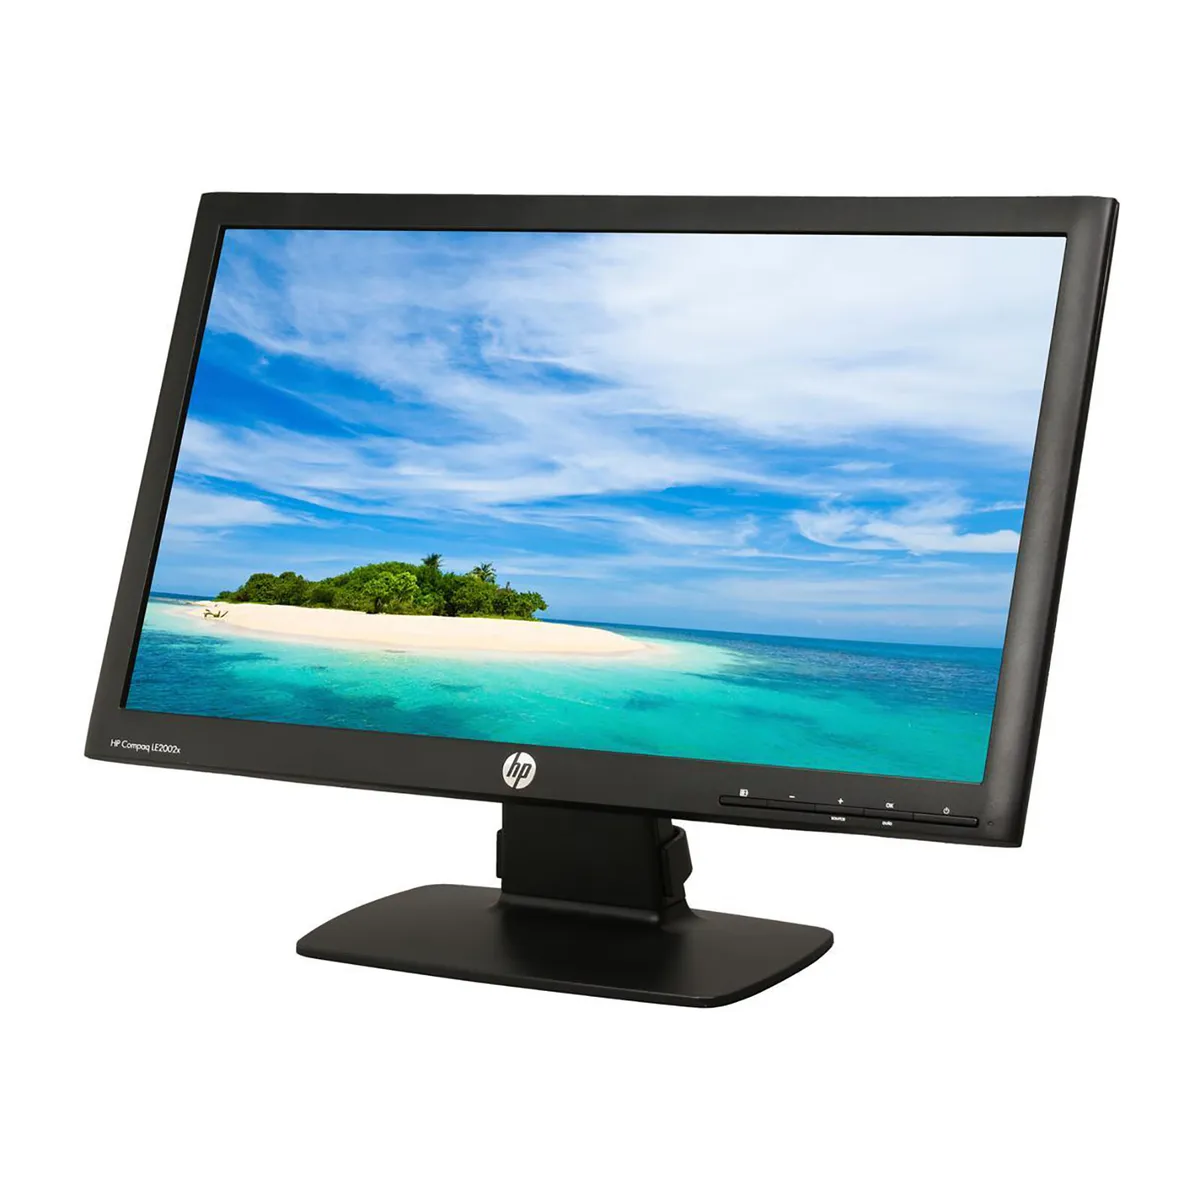 Compaq S1922 18.5-inch Widescreen LCD Monitor